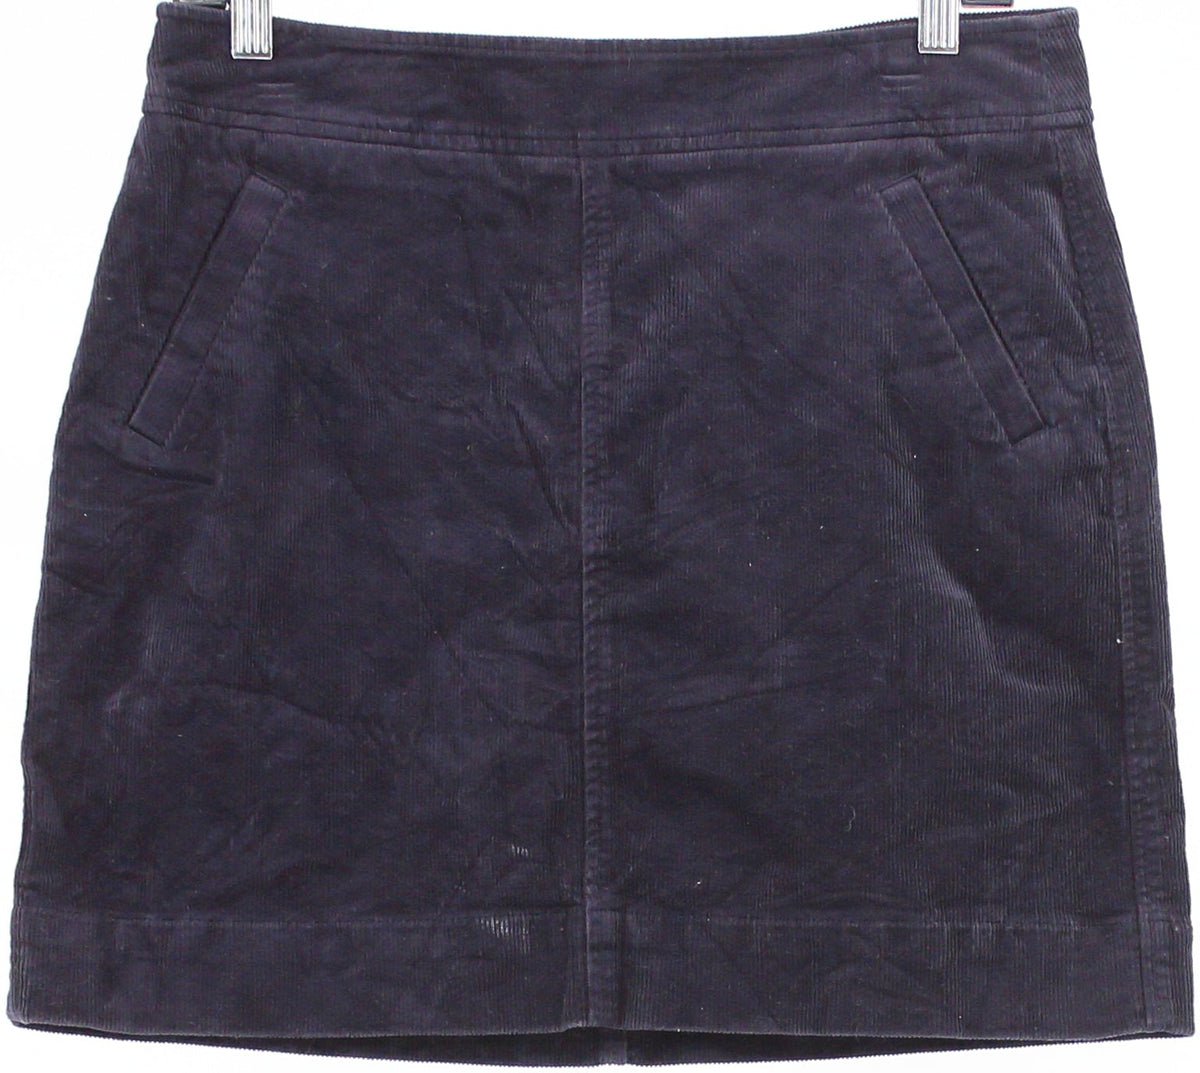 Ann Taylor Loft Navy Blue Corduroy Short Skirt